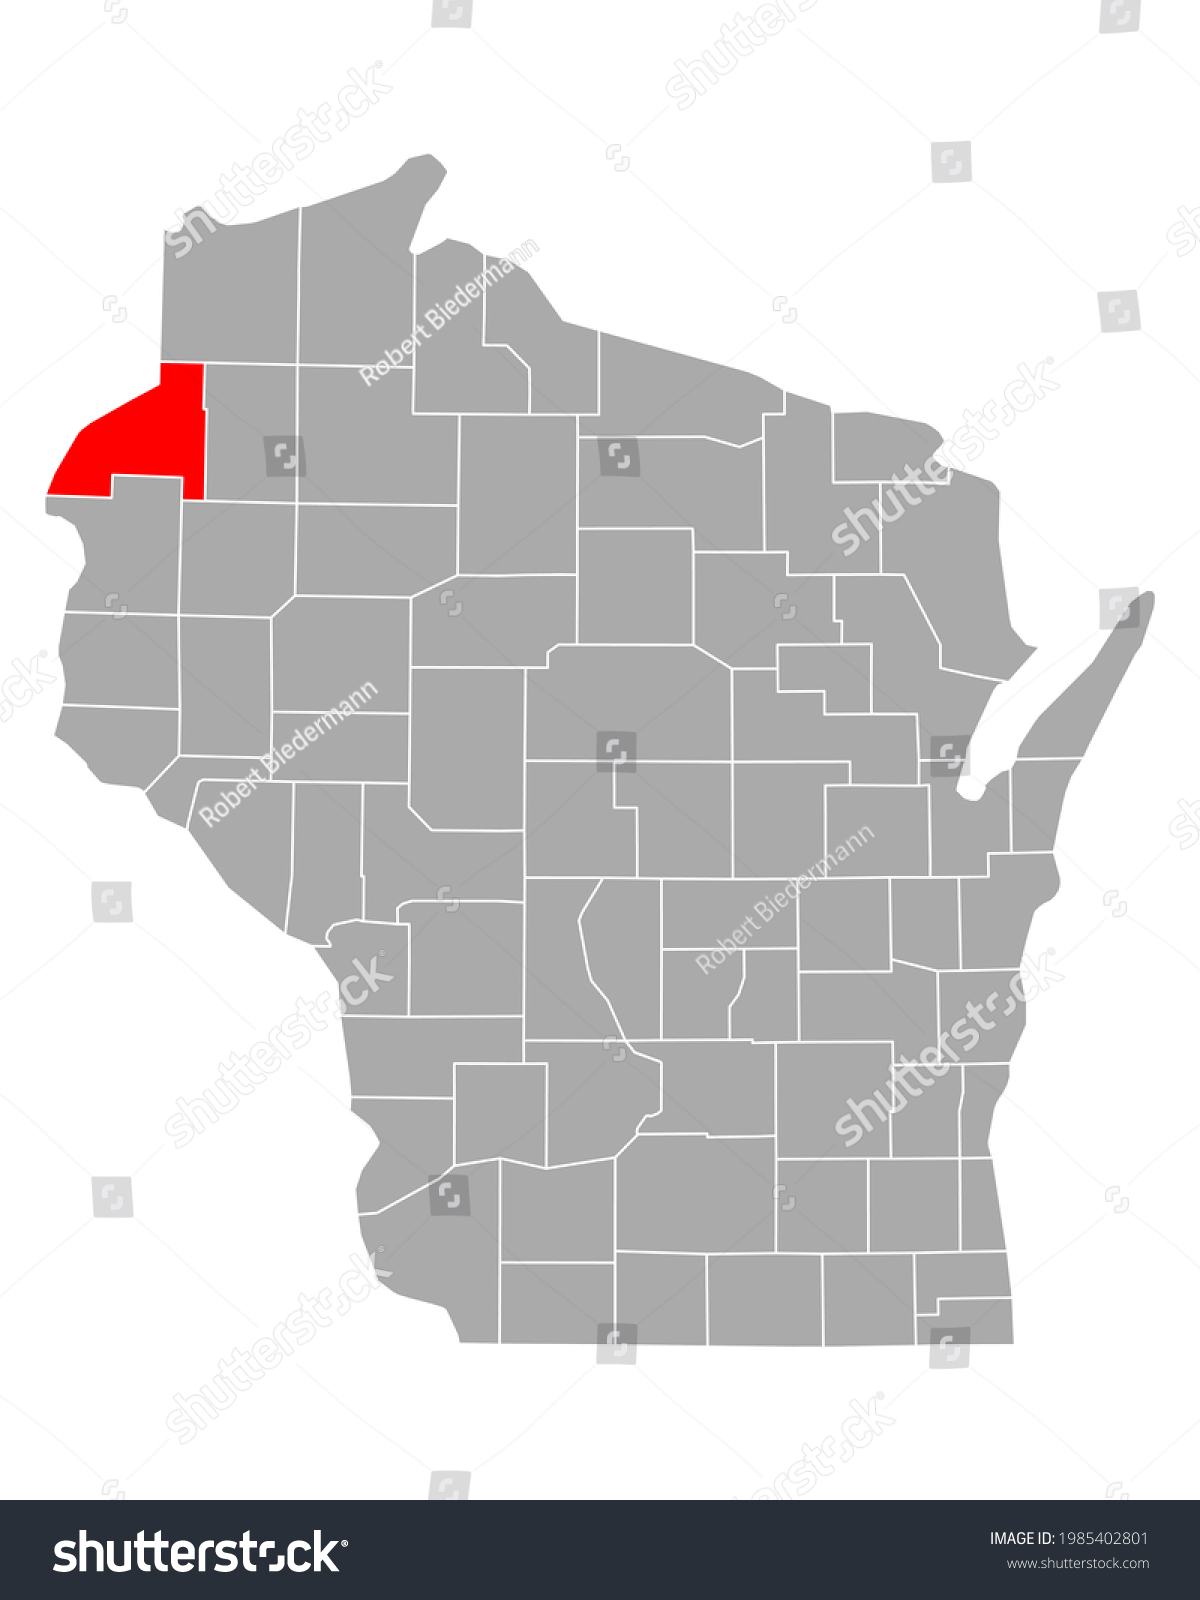 Map Of Burnett In Wisconsin On White Royalty Free Stock Vector 1985402801 9479